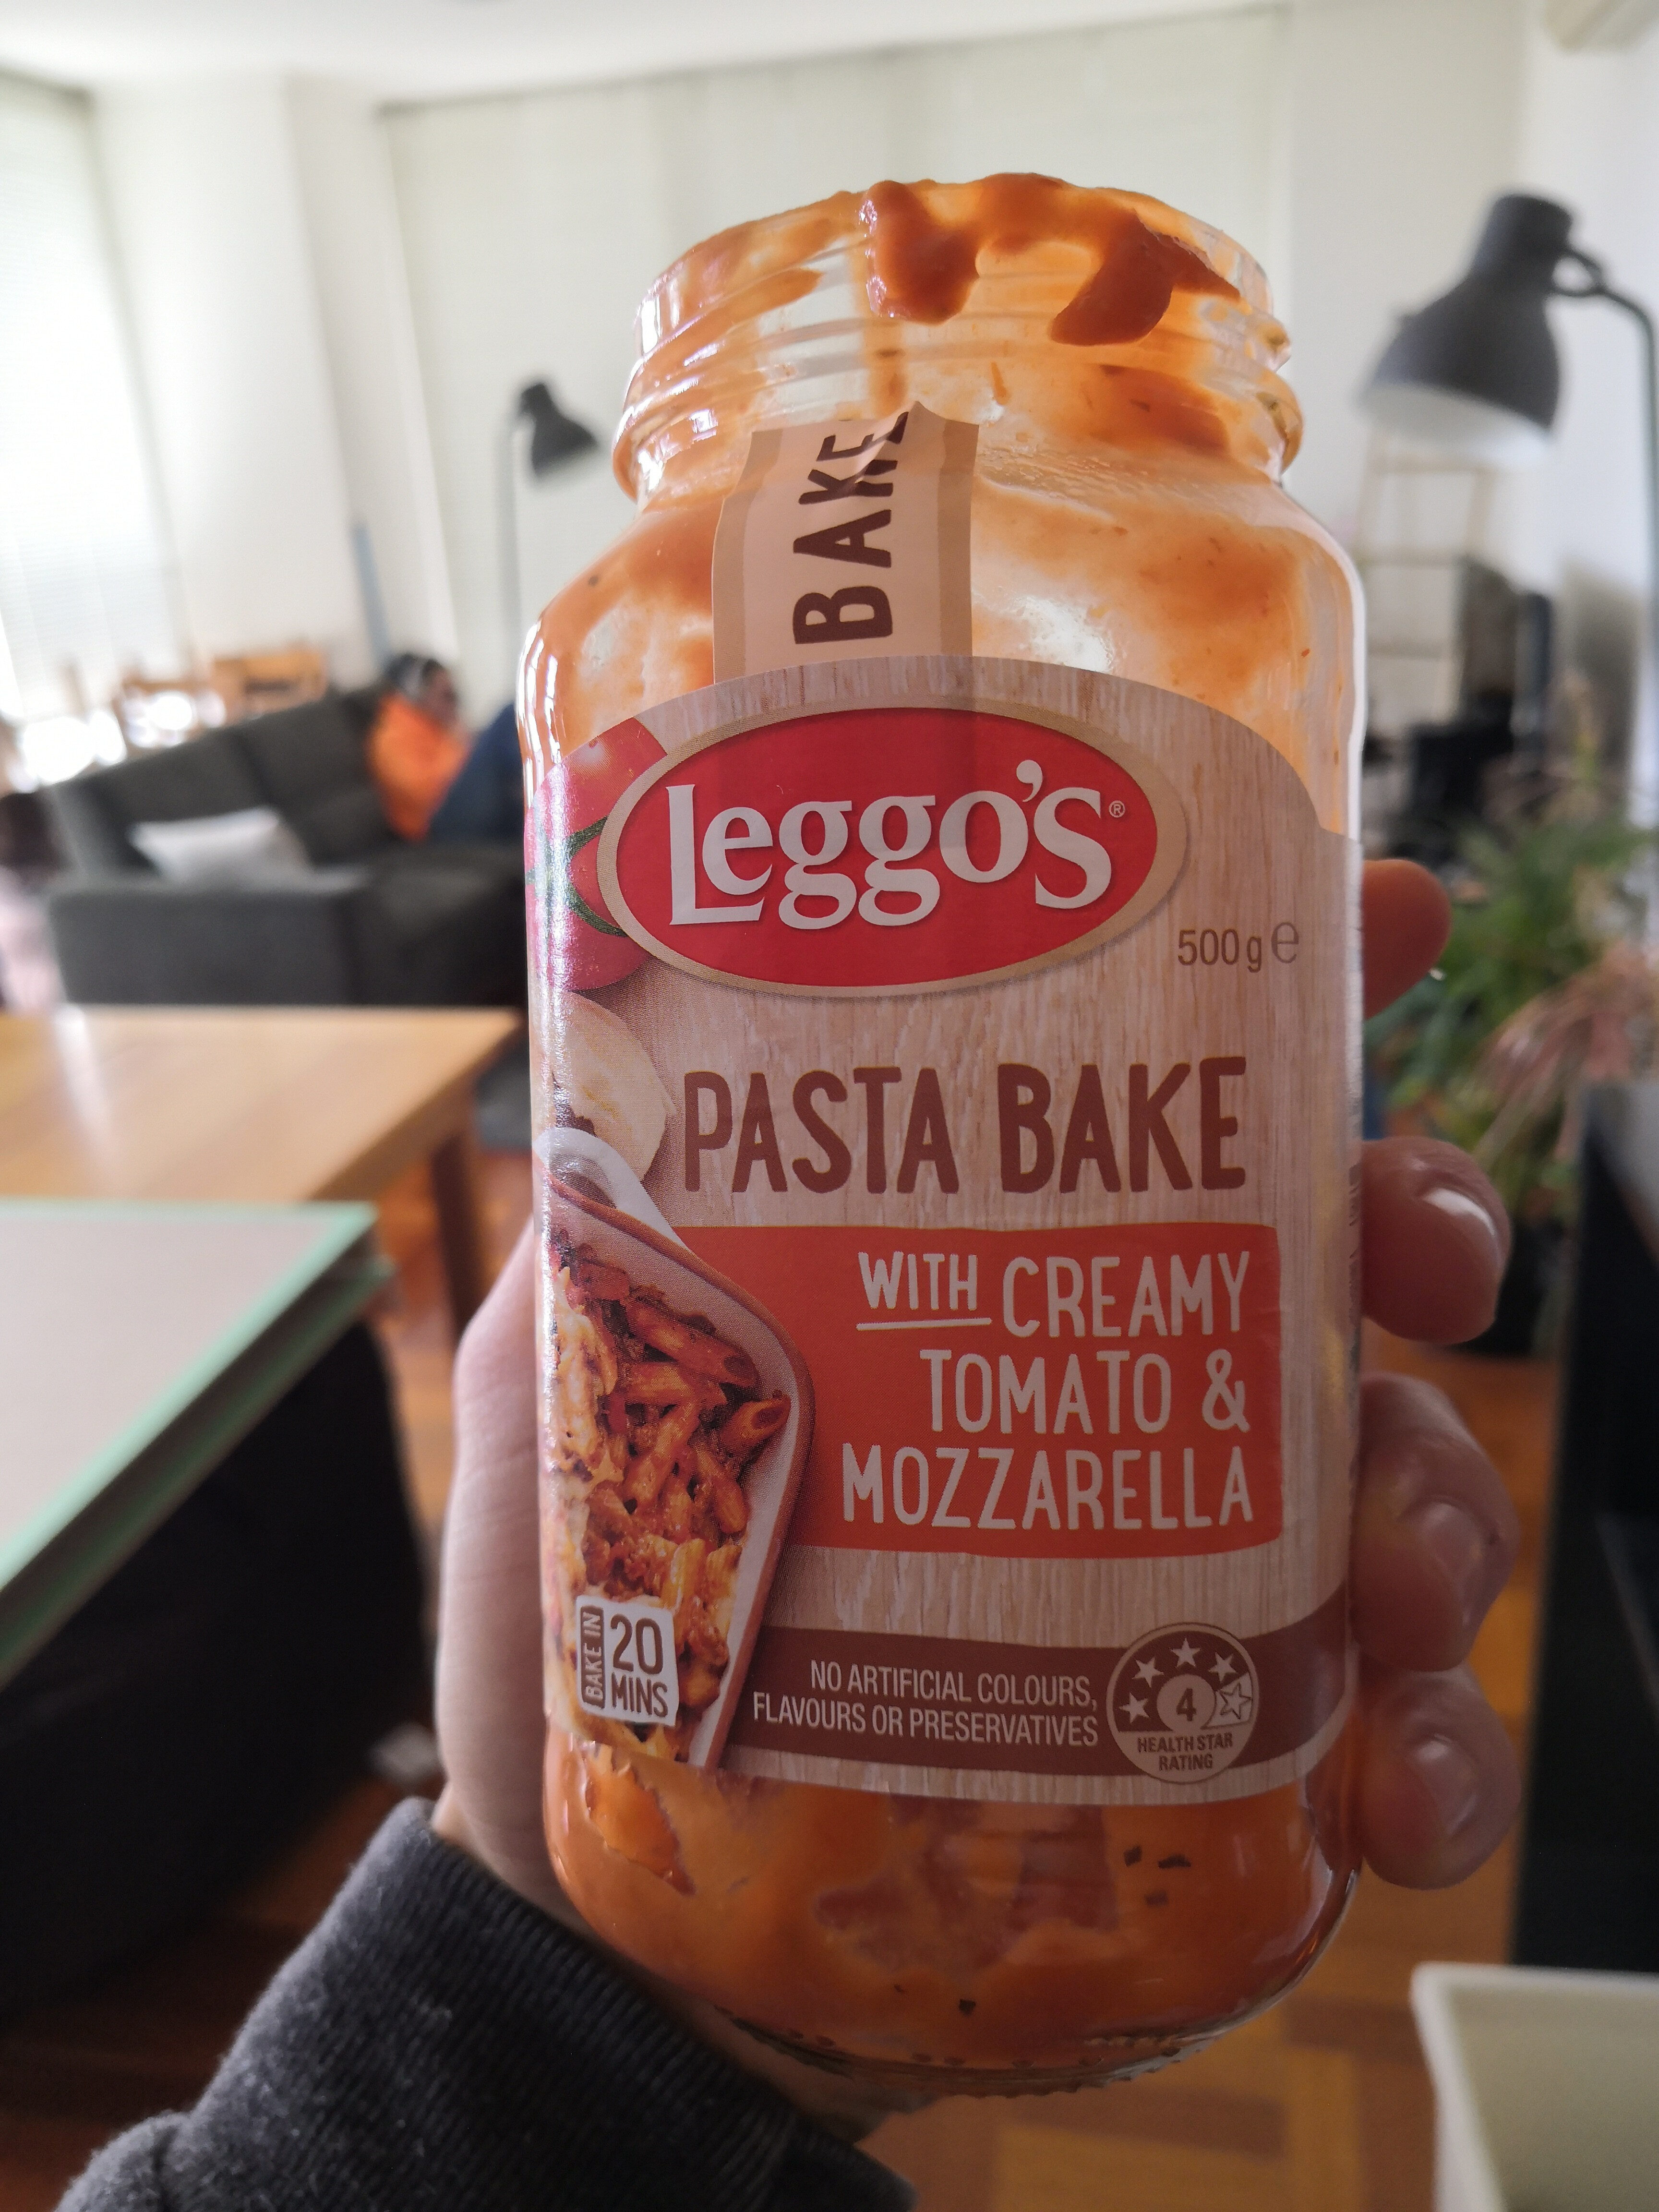 Leggo's pasta bake 500g - Product